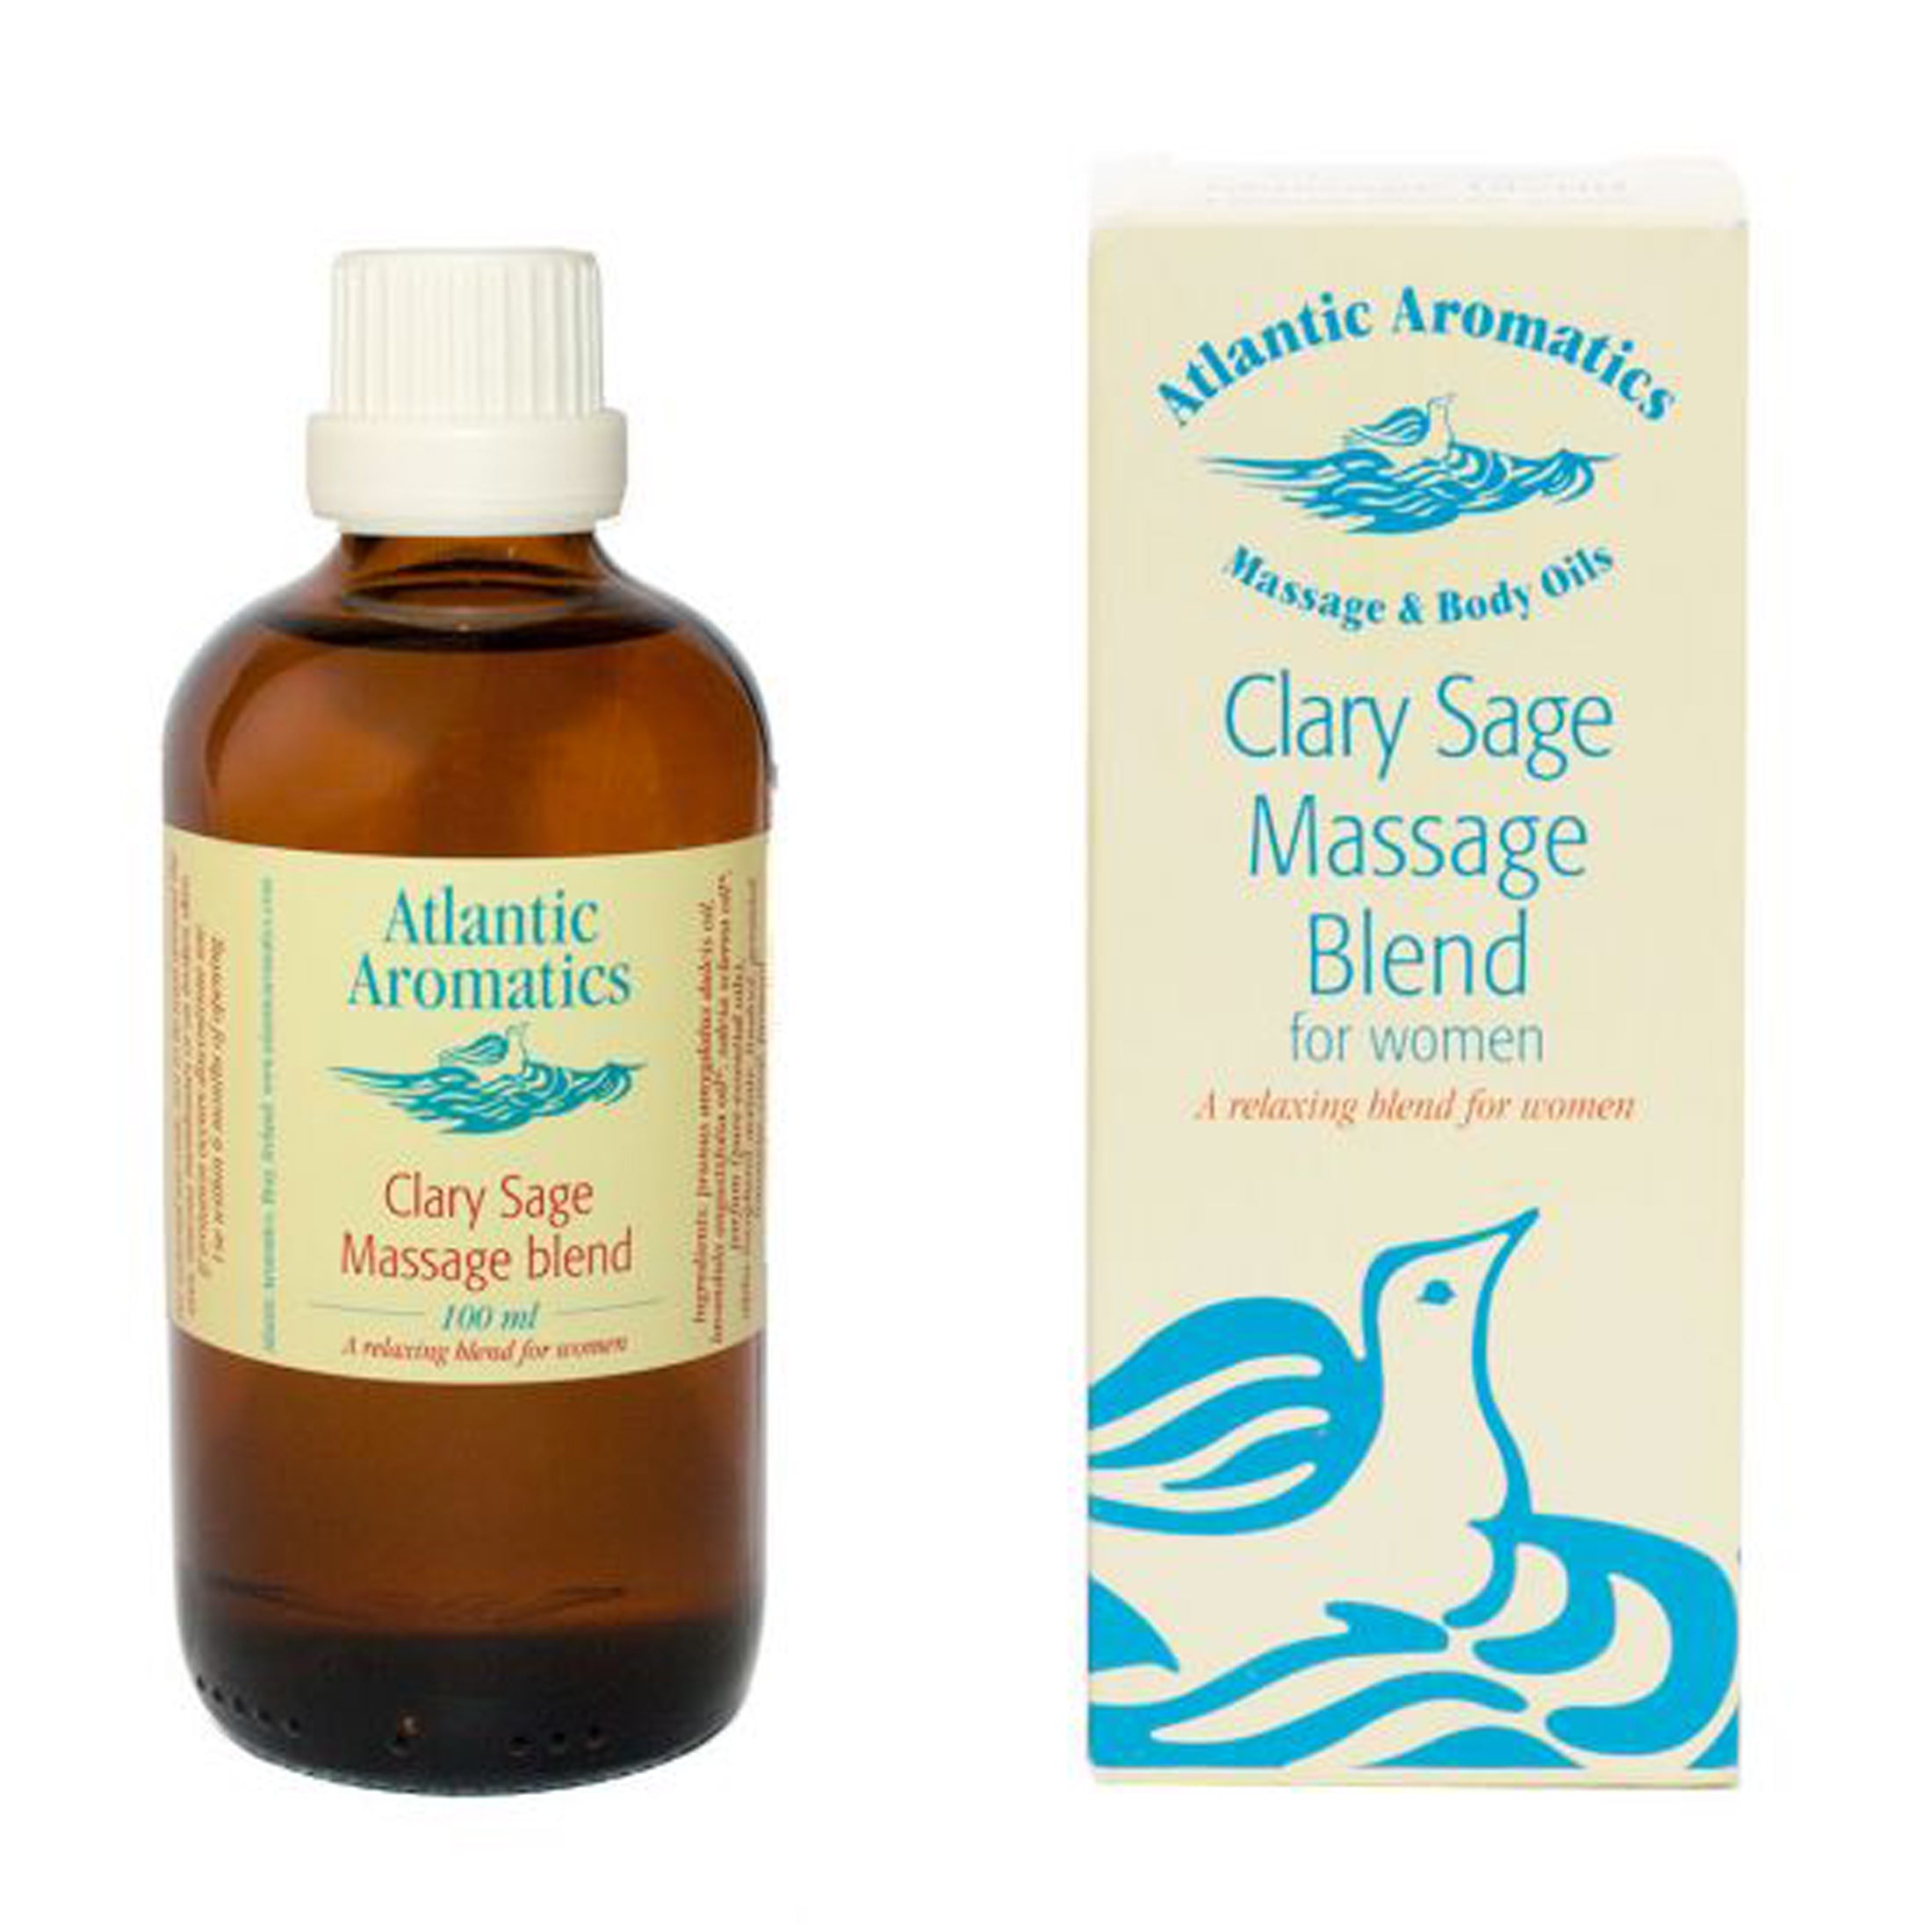 Clary Sage Massage Blend